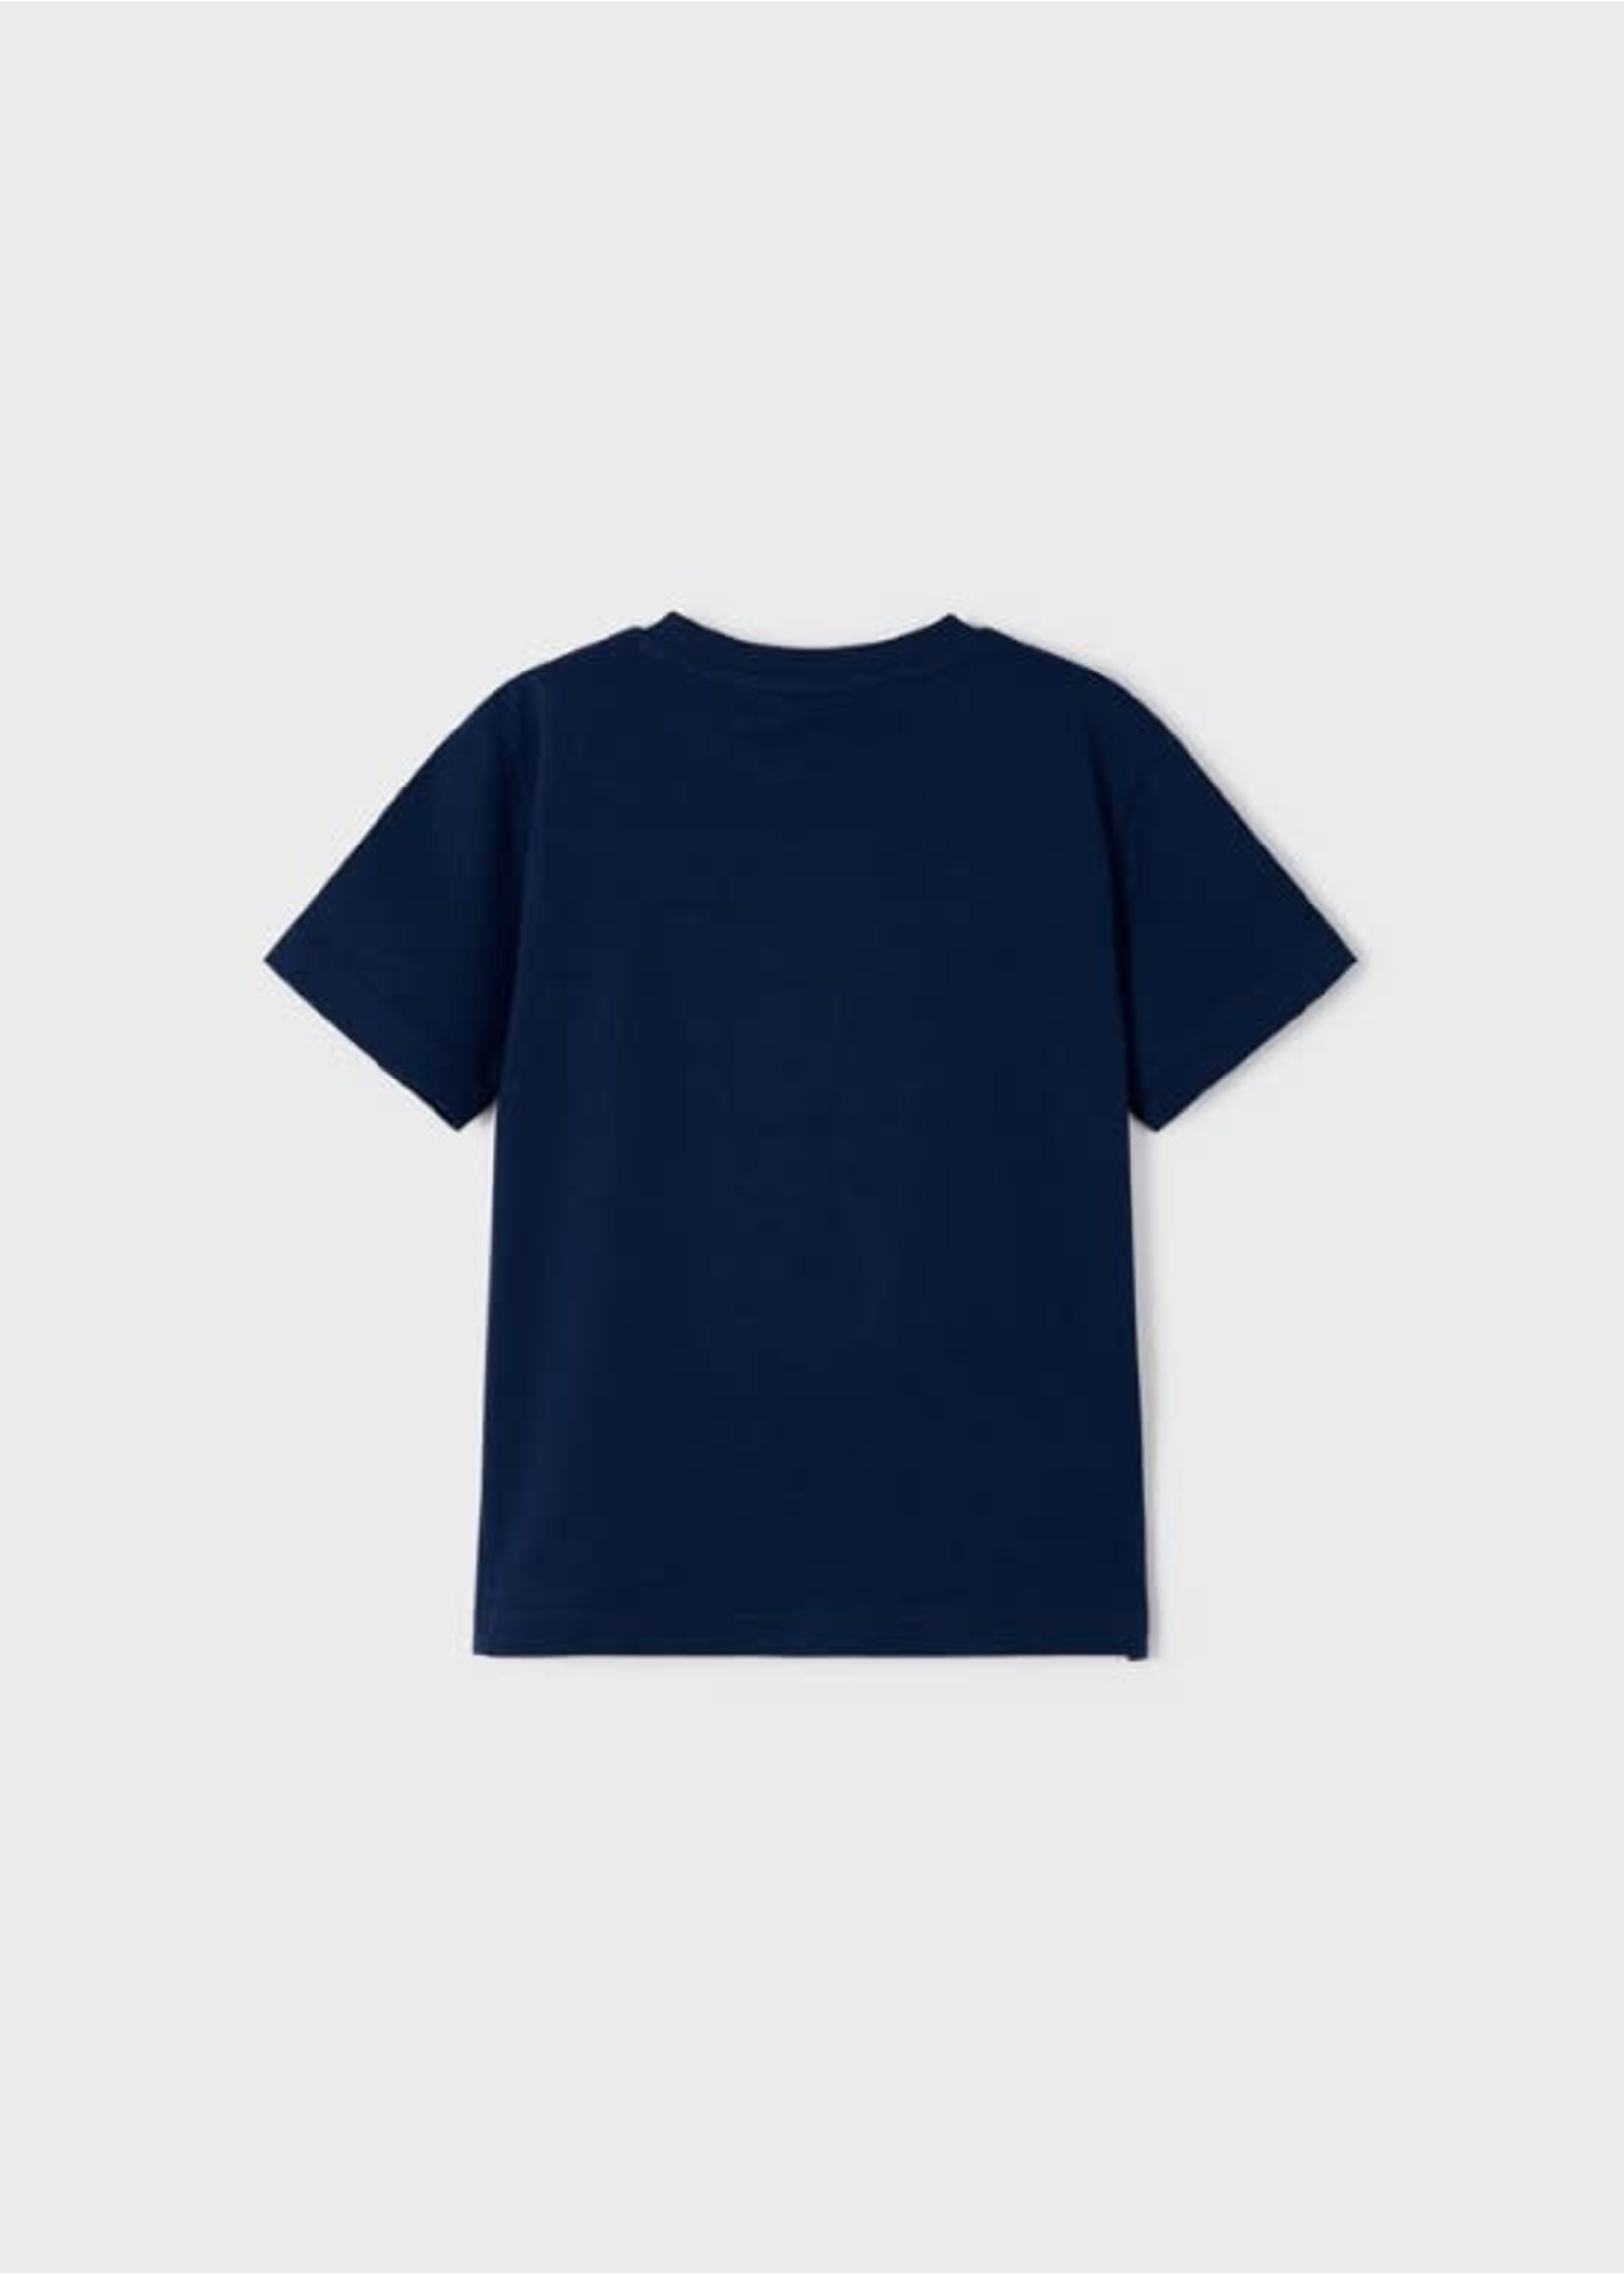 Mayoral Mayoral S/s t-shirt Blue - 23 03019